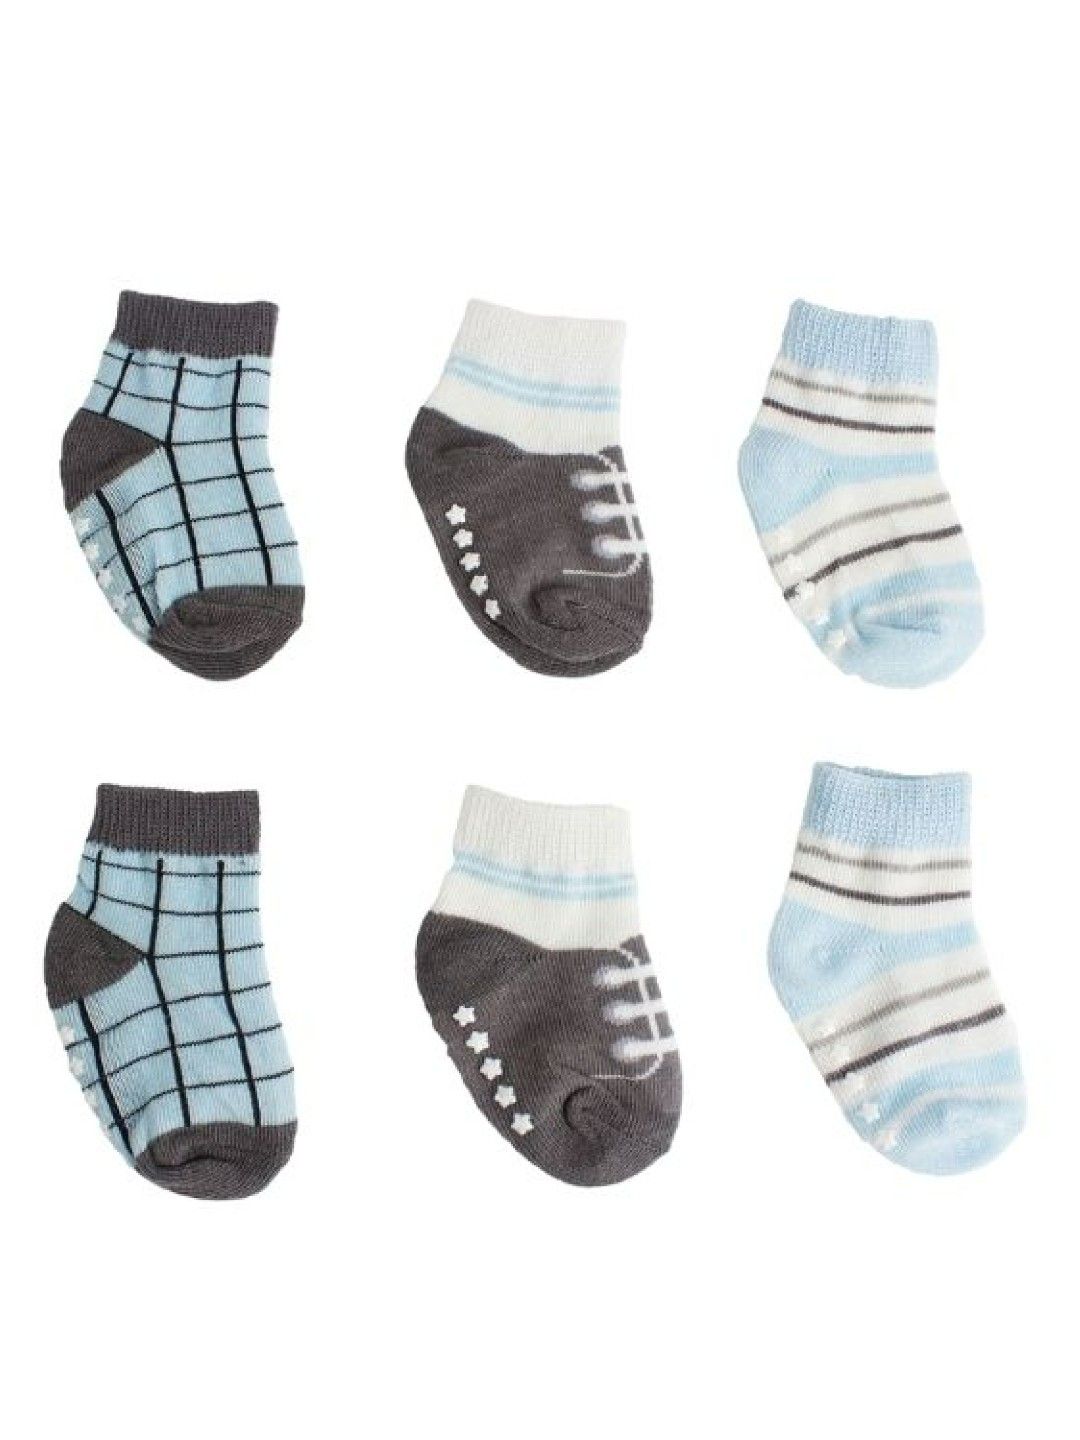 Little Steps Baby Socks For Boys (3 pairs)